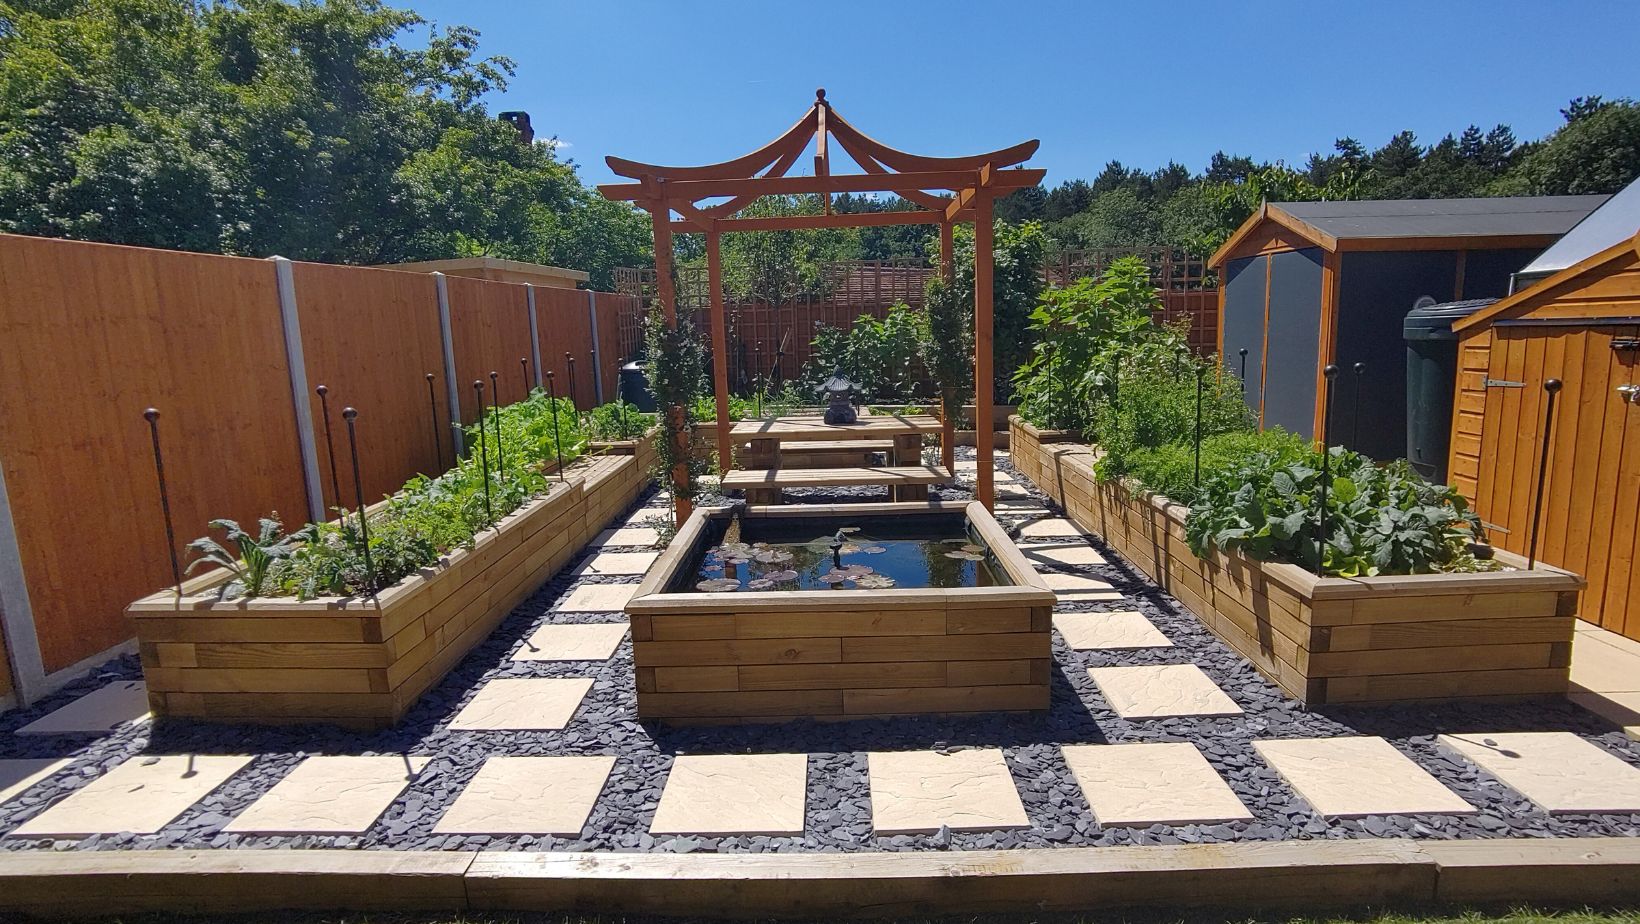 New build garden